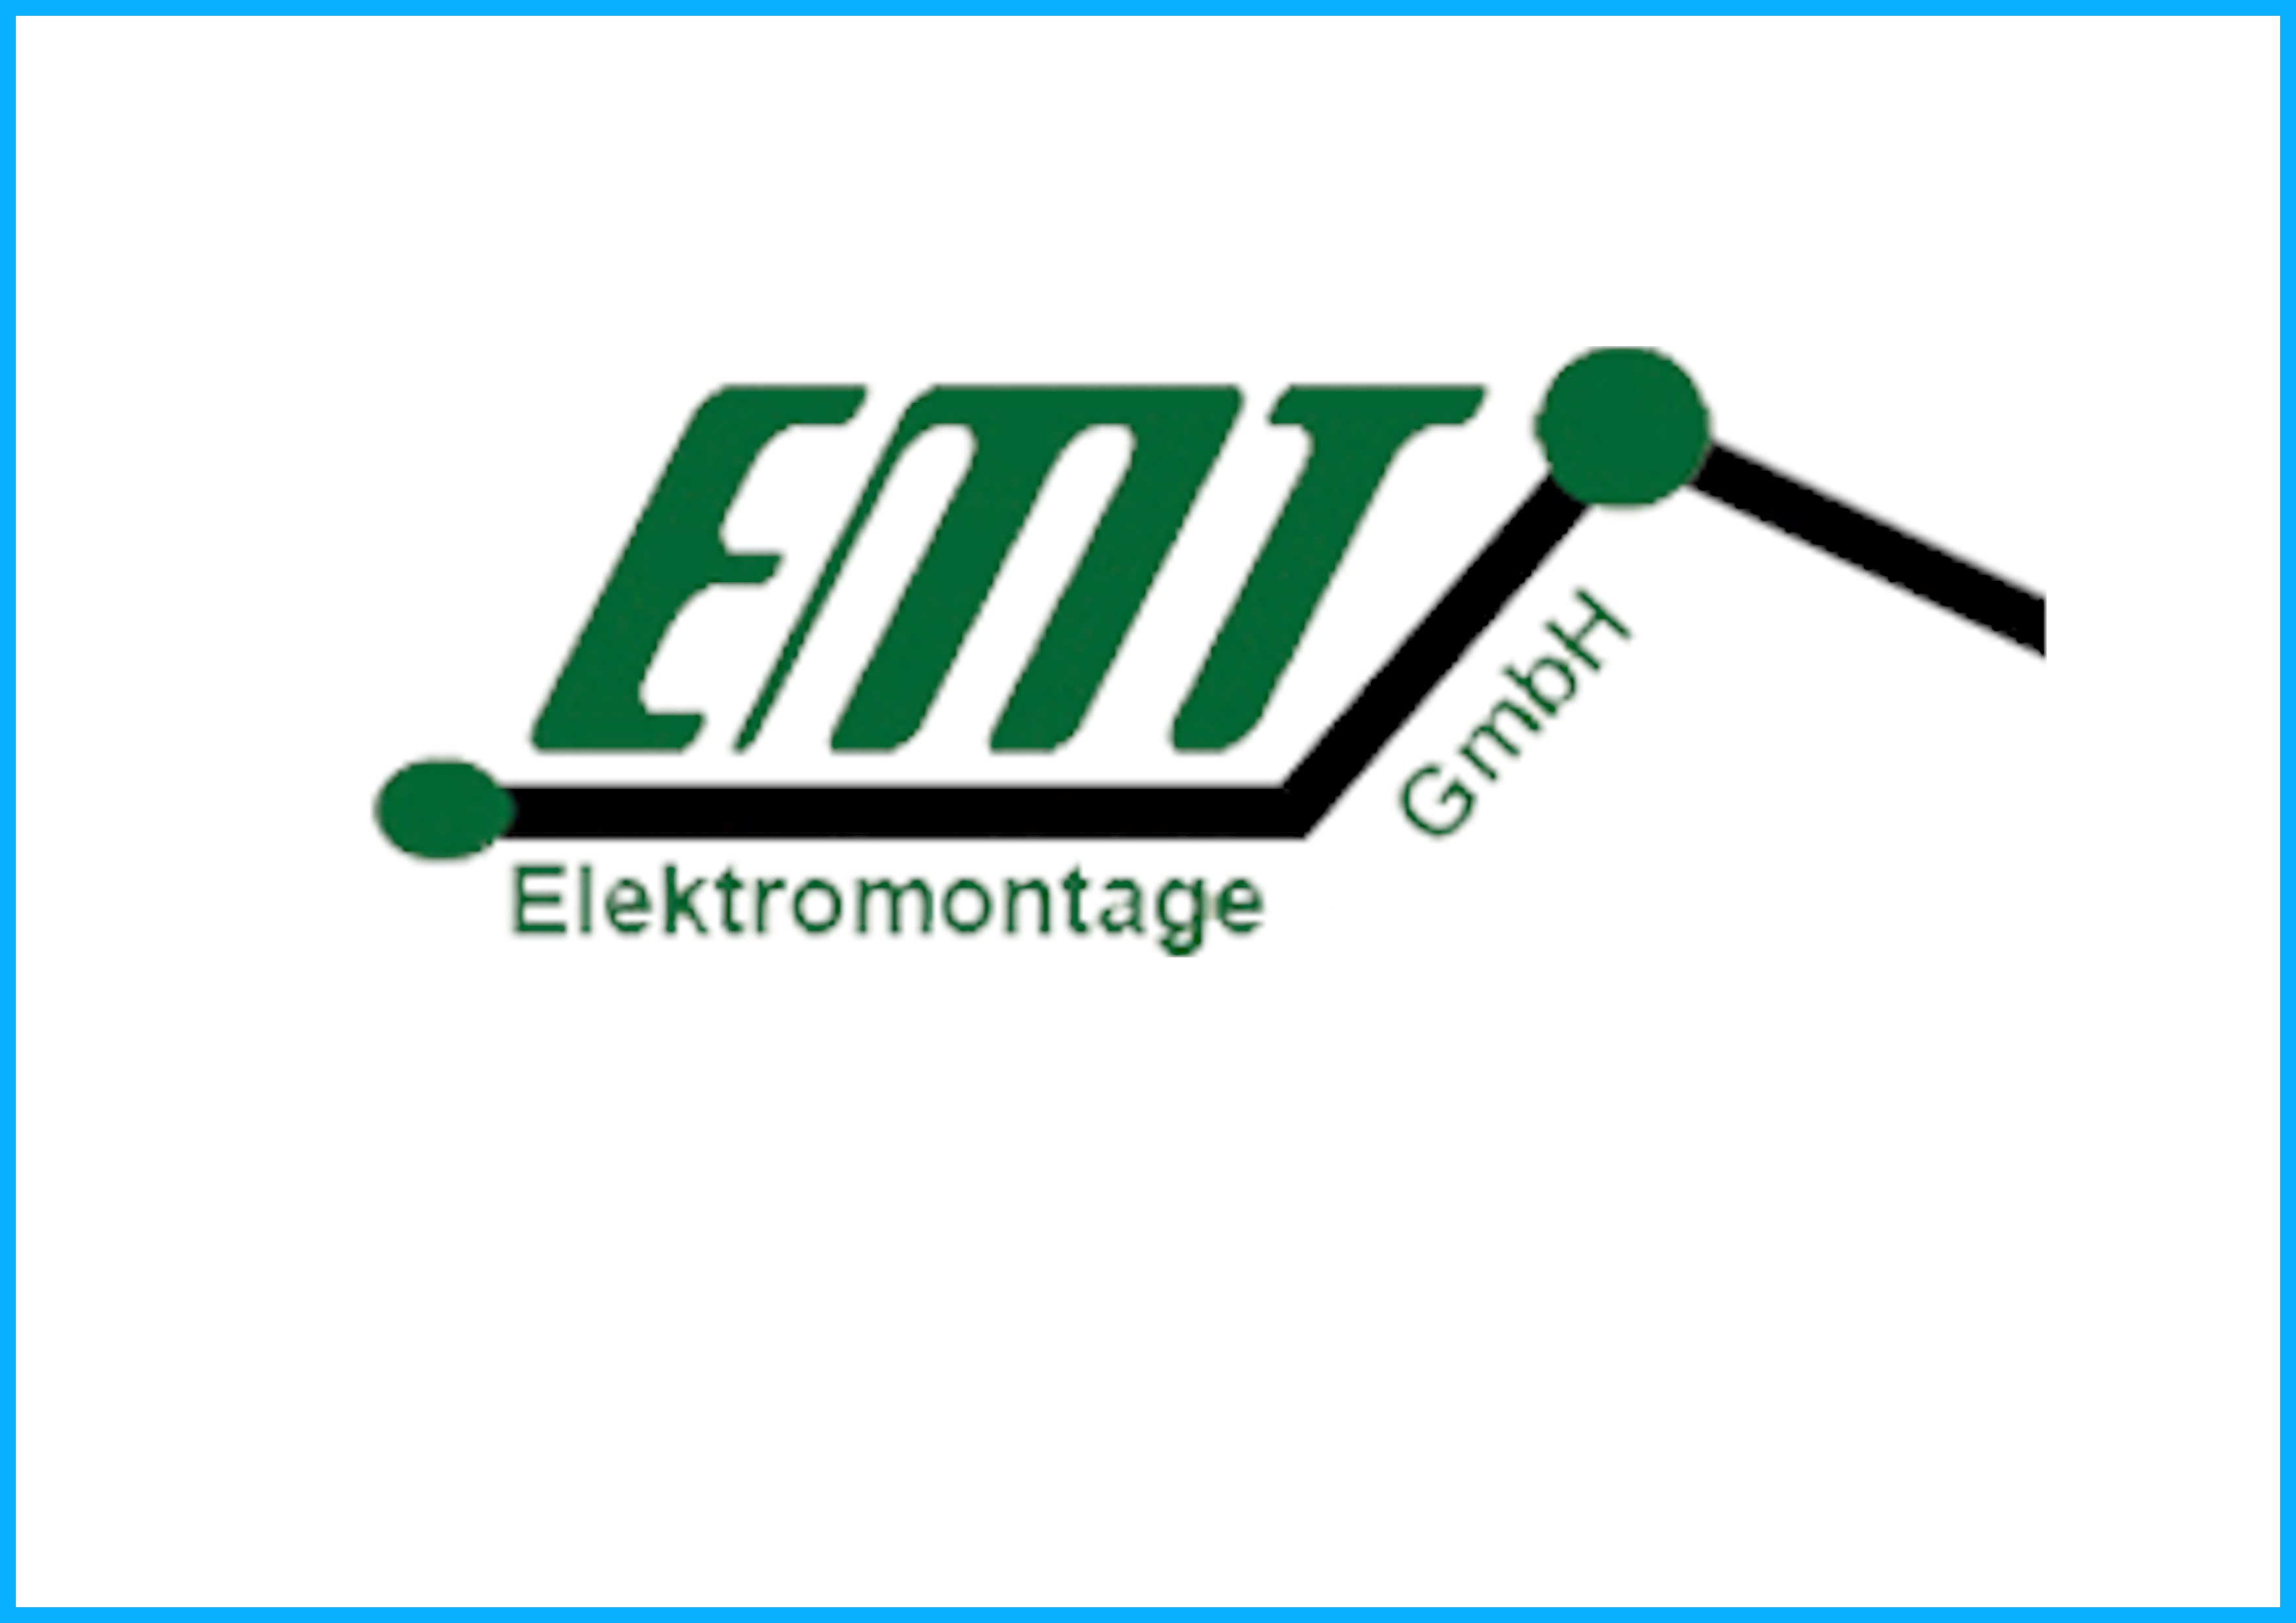 EMT Elektromontage GmbH